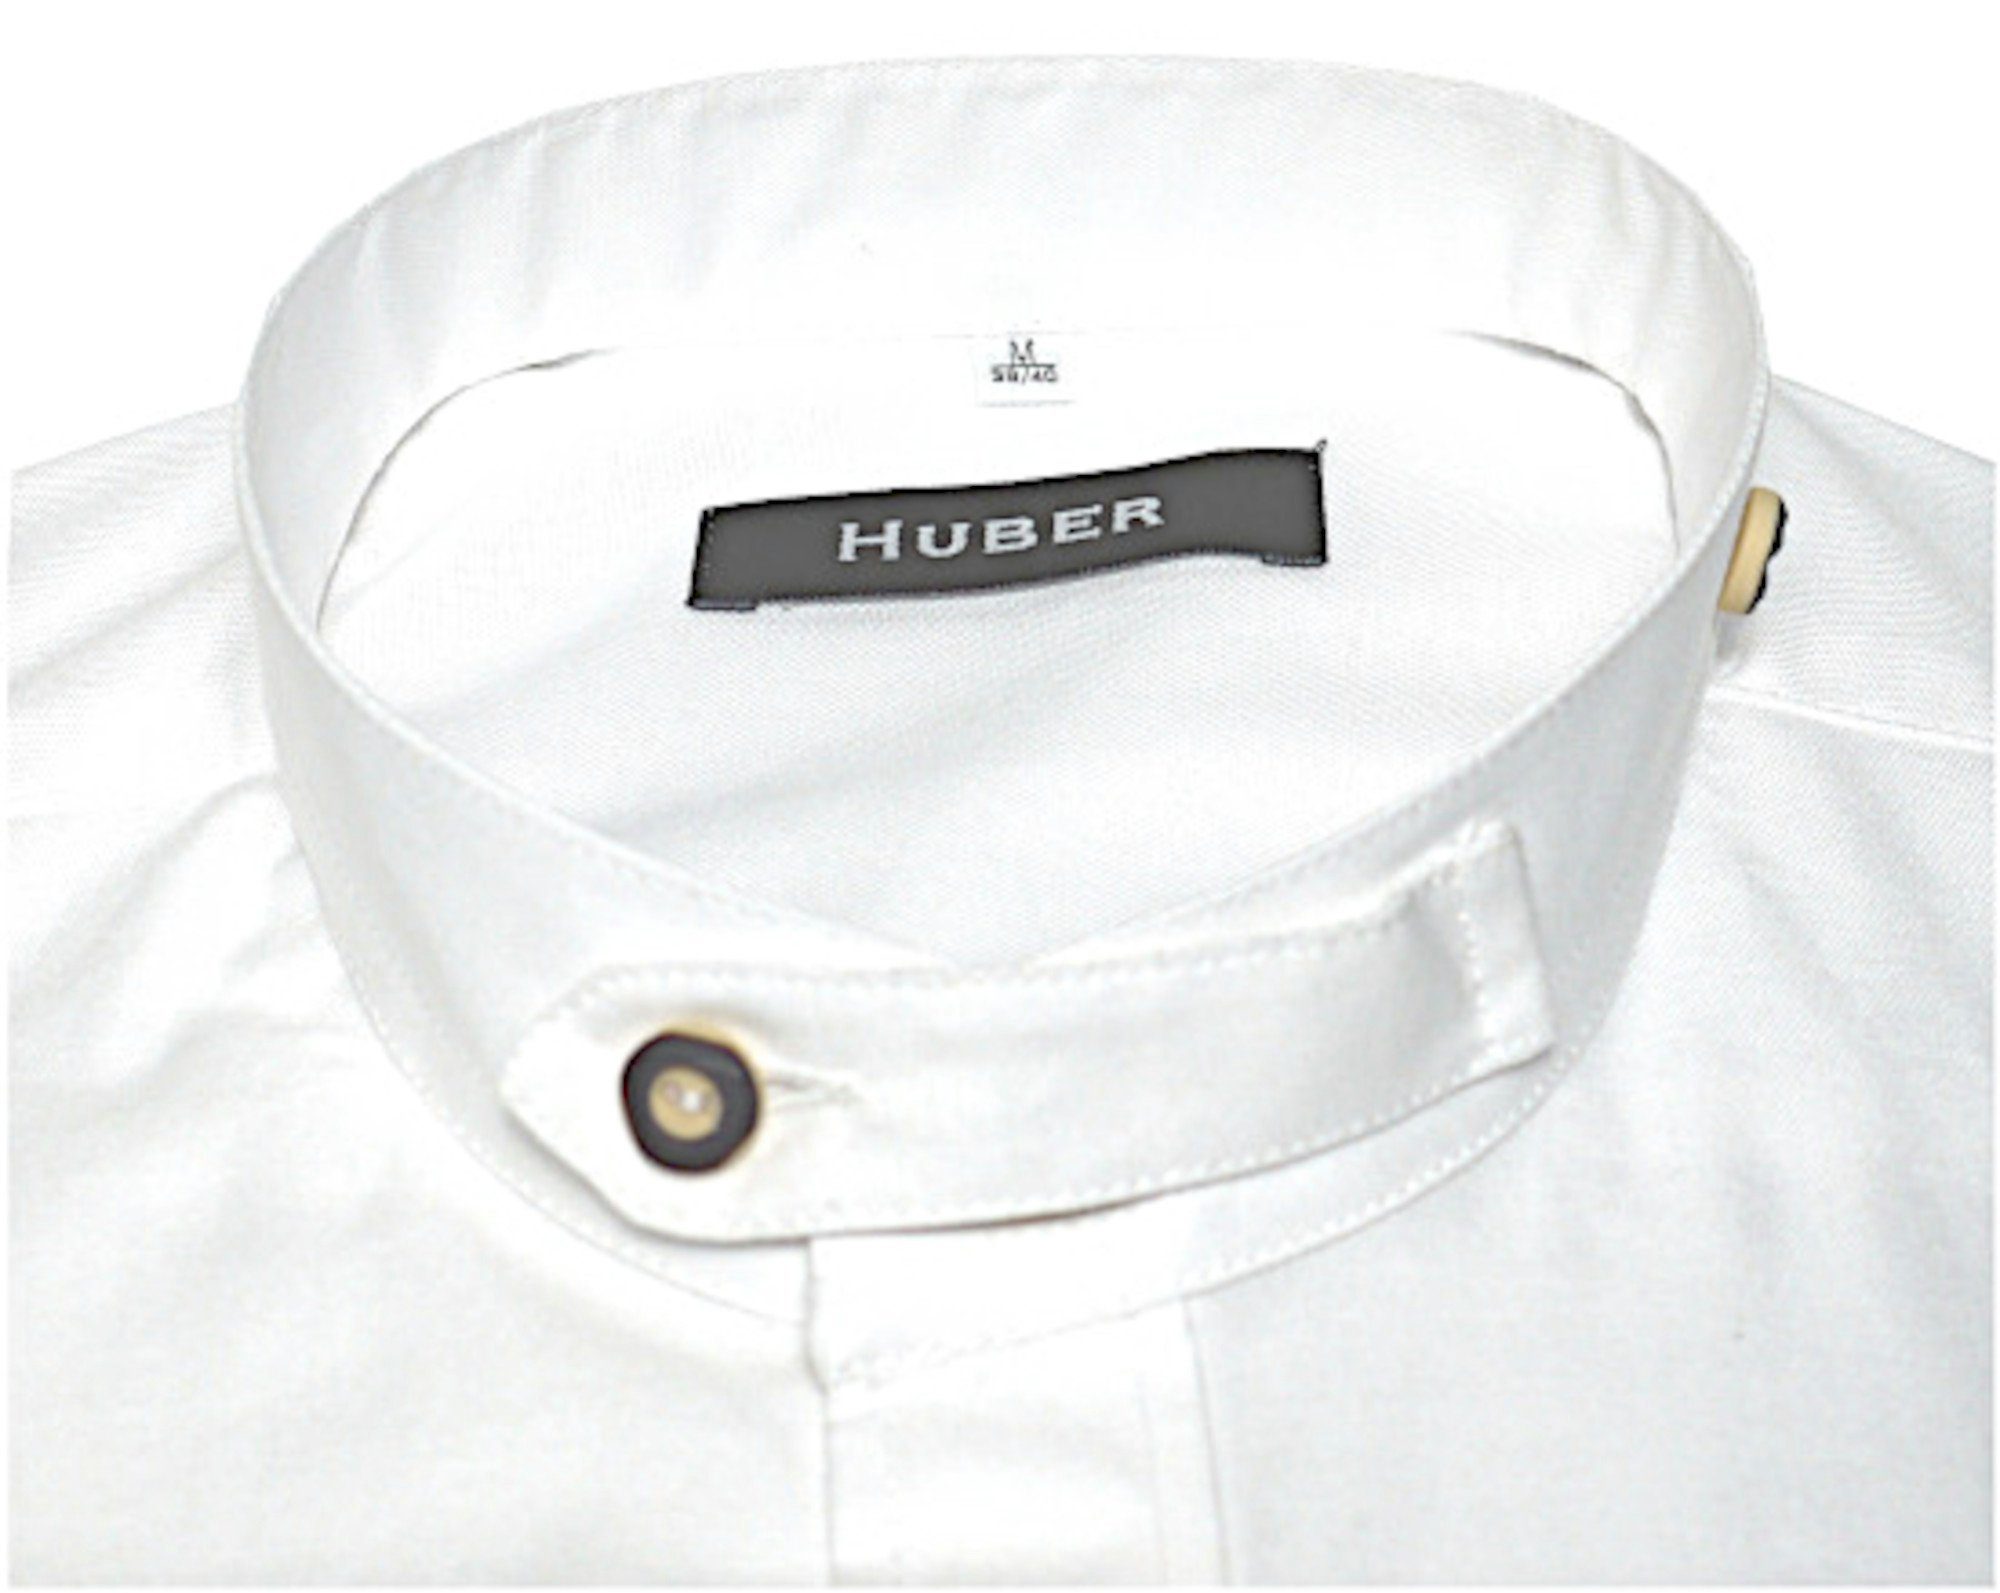 Huber Hemden Trachtenhemd Regular/Comfort-gerader HU-0706 Schnitt Stehkragen